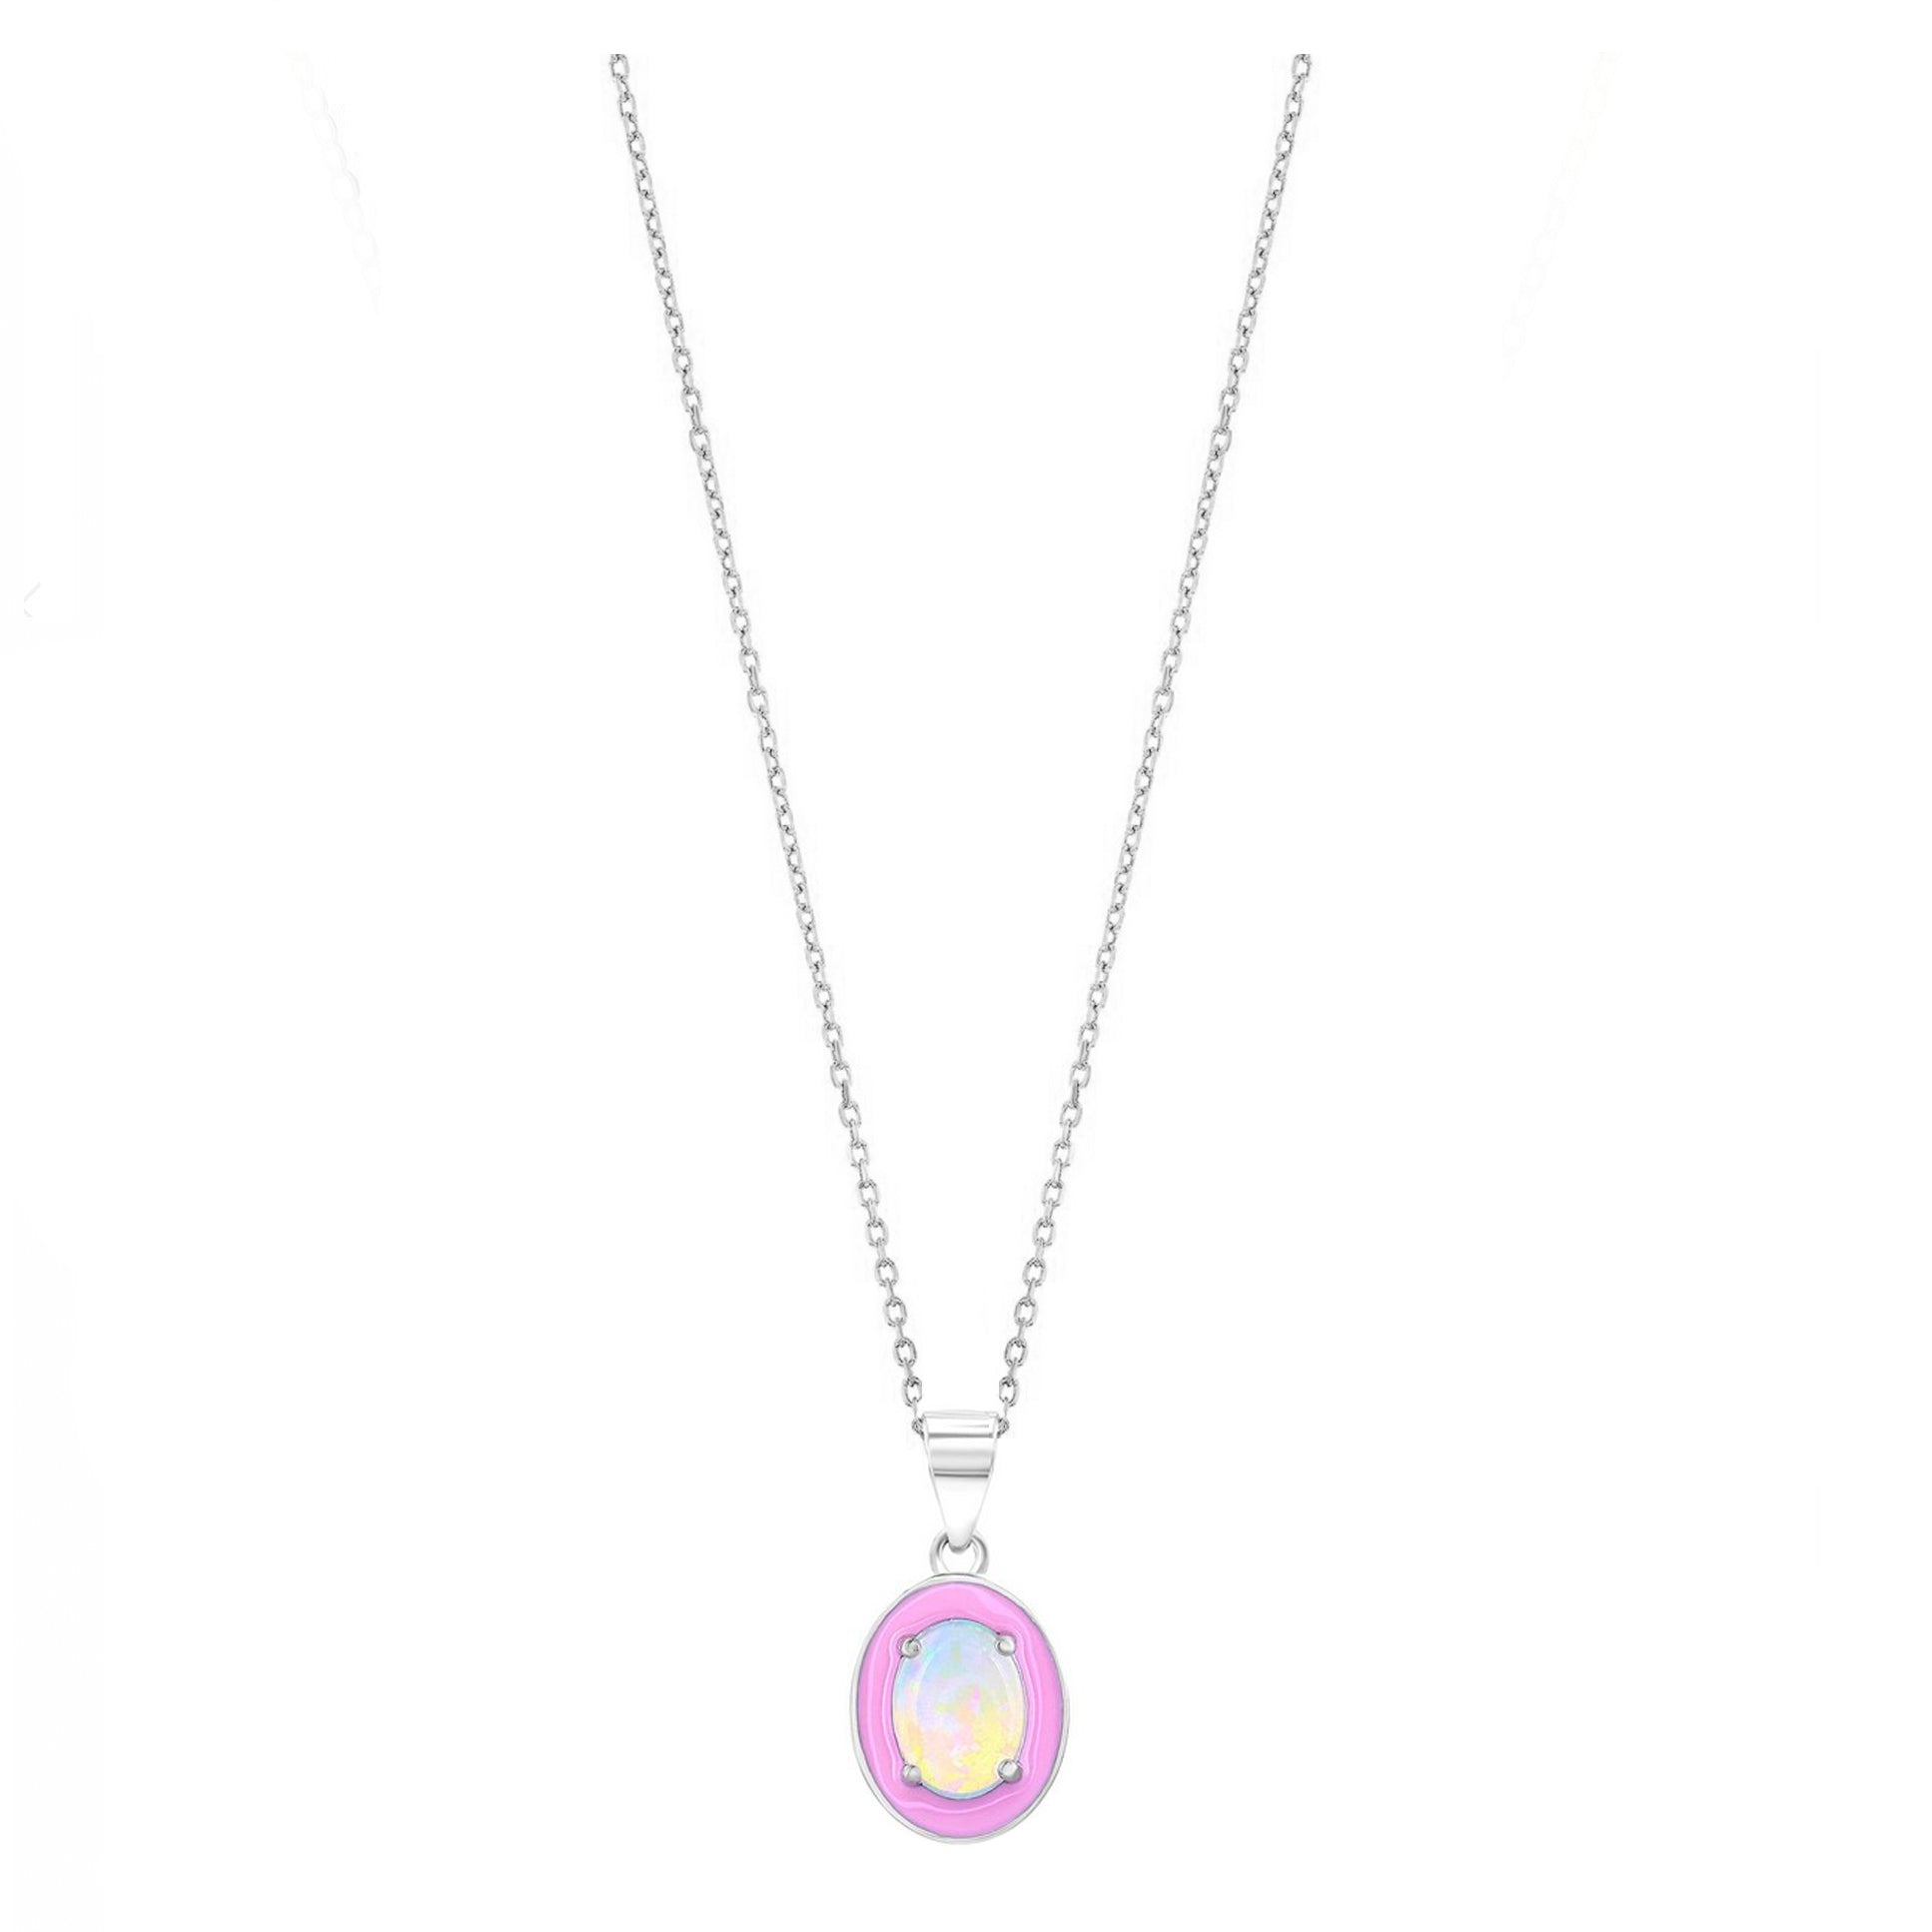 Oval-shaped Pink Enamel Necklace